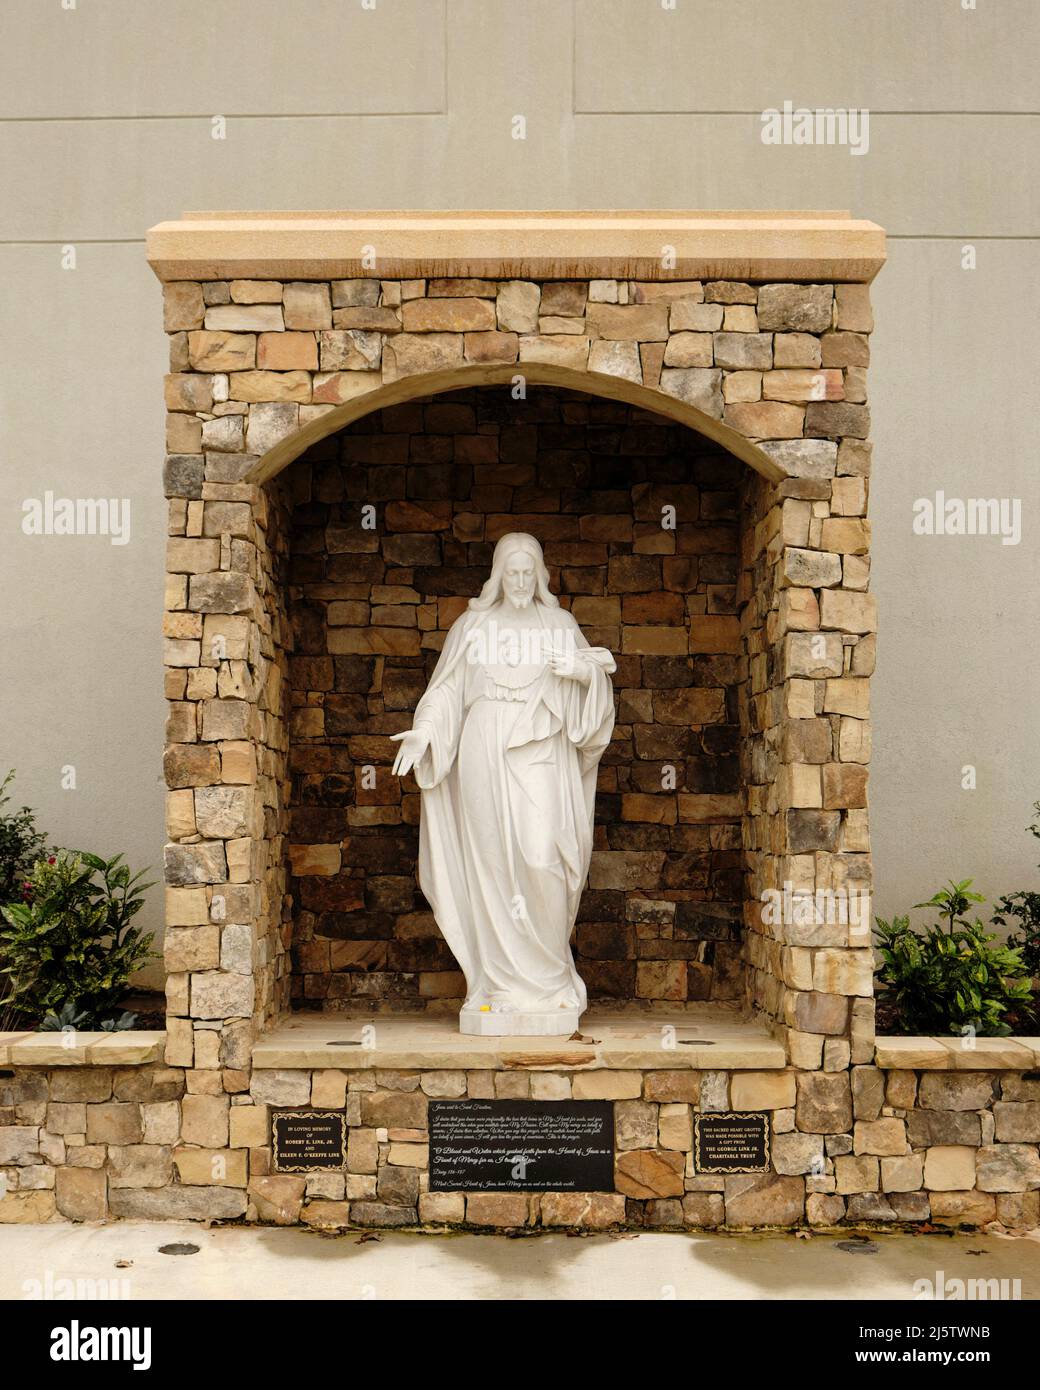 Statue of Jesus Christ, a Christian religious symbol, in a stone grotto as a memorial in Blue Ridge Georgia, USA. Stock Photo